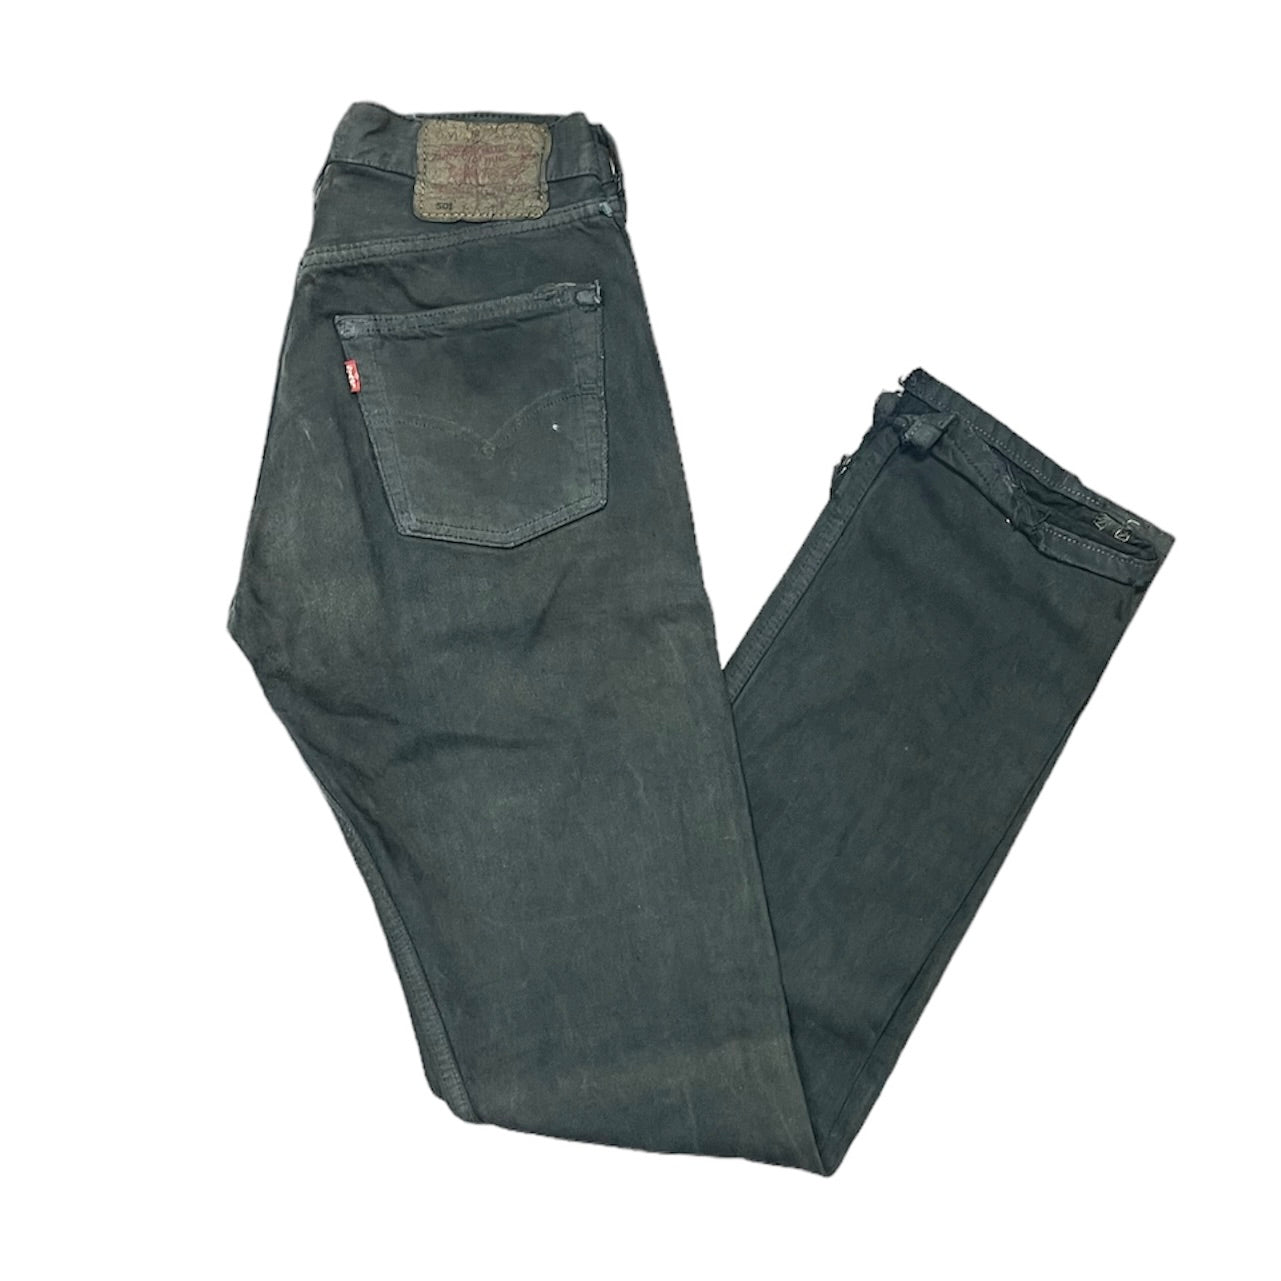 Vintage Levis 501 Vintage Gray Jeans